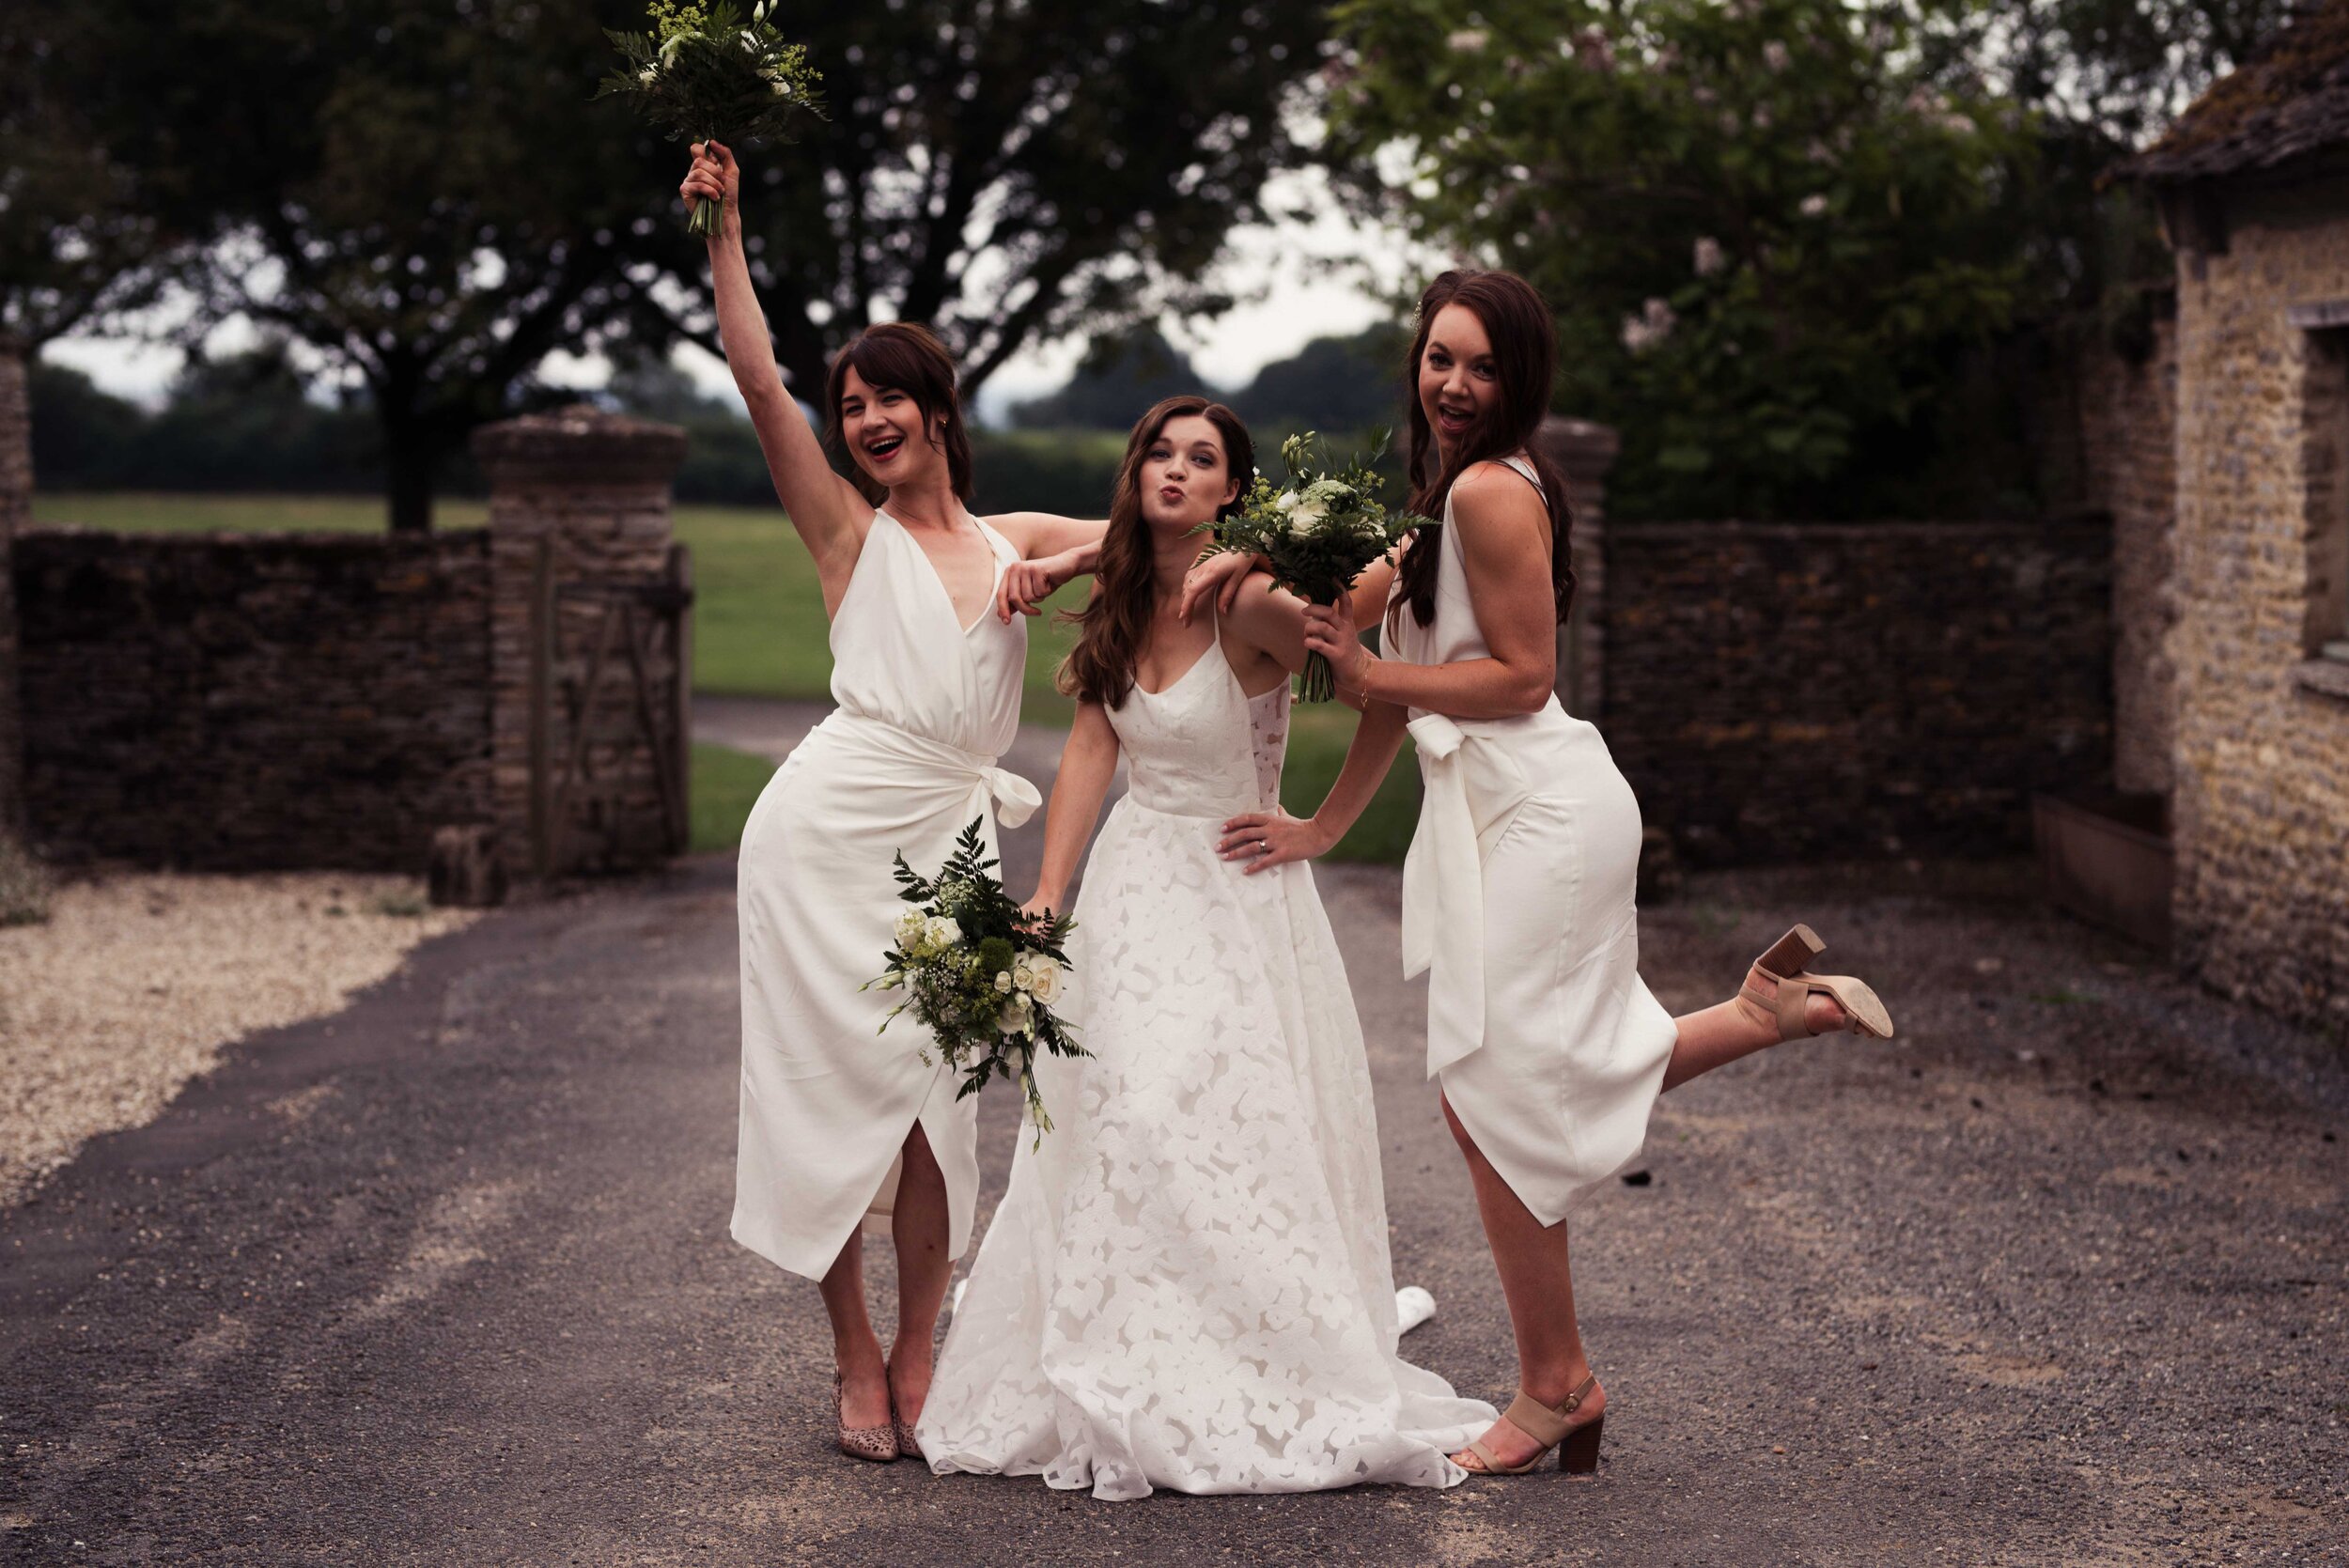 Bridesmaids throwing a pose